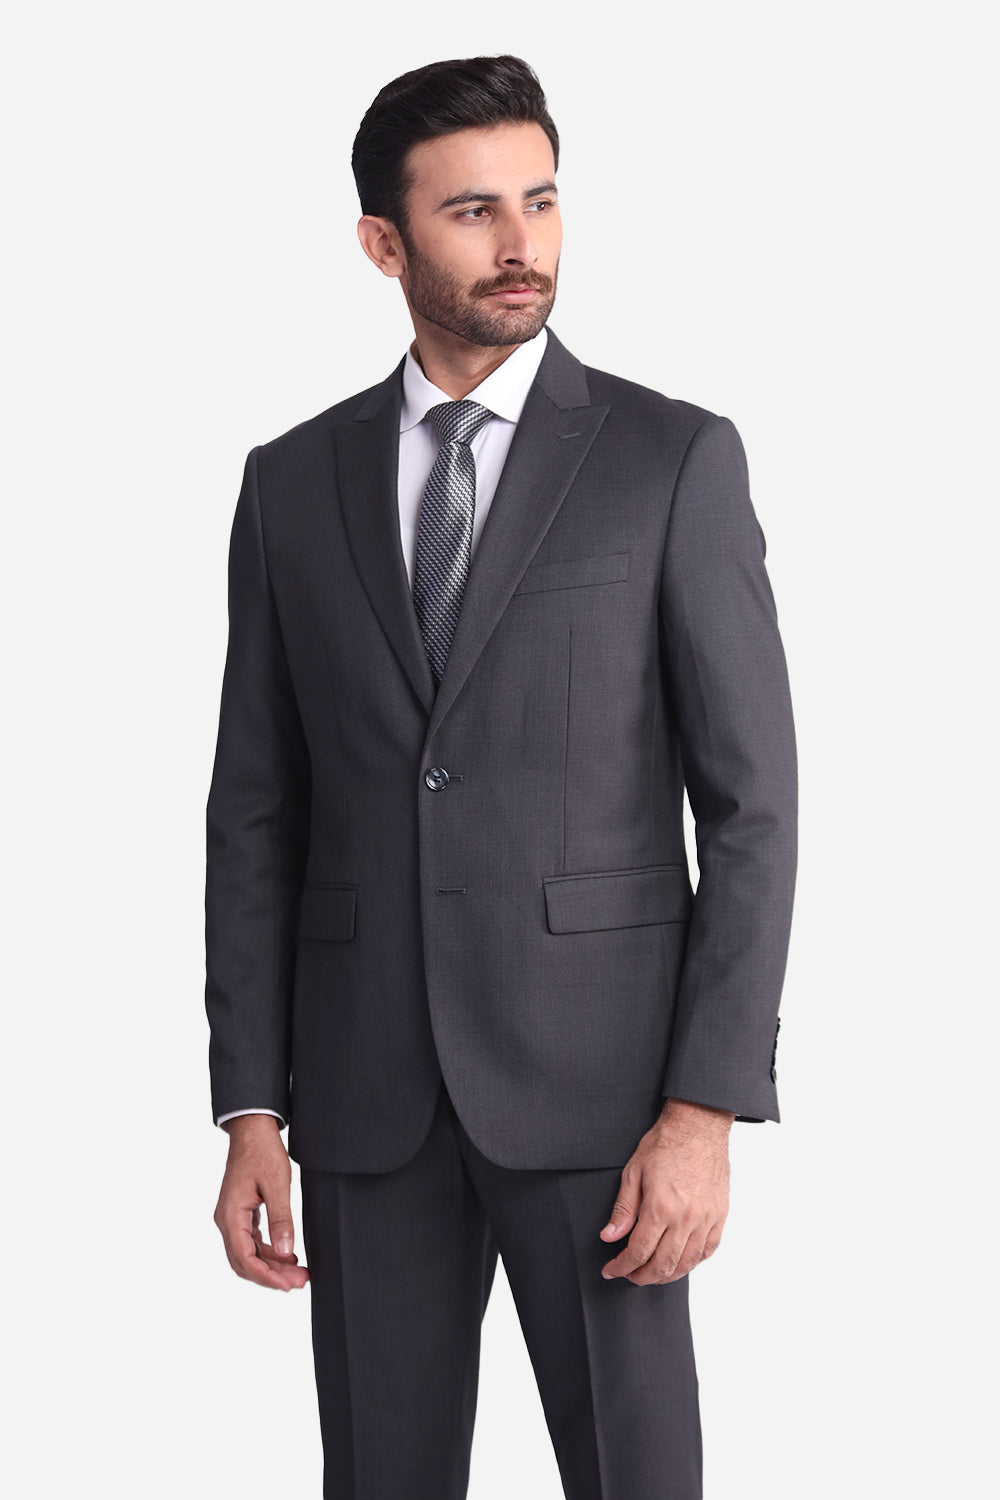 Charcoal Grey Textured Coat MC20159-CG – RoyalTag